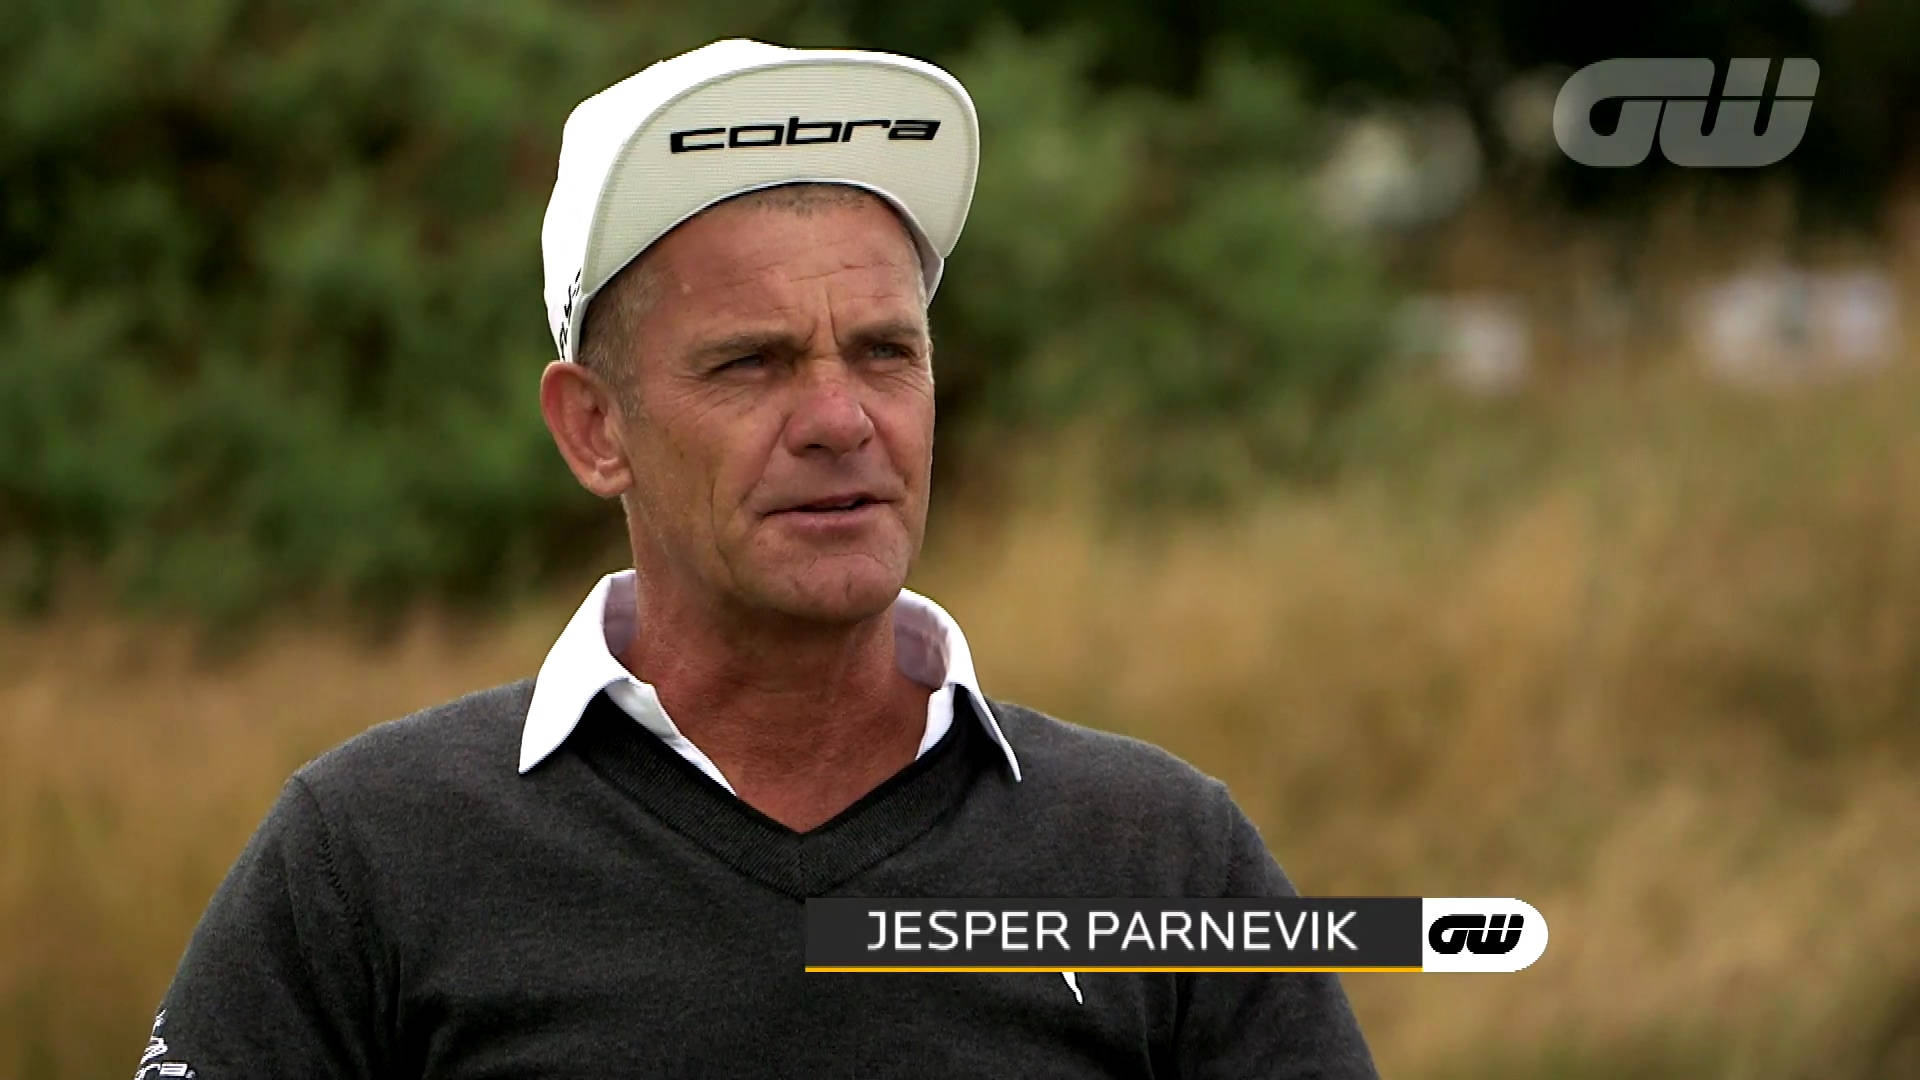 Jesperparnevik En El Video De Golfing World. Fondo de pantalla